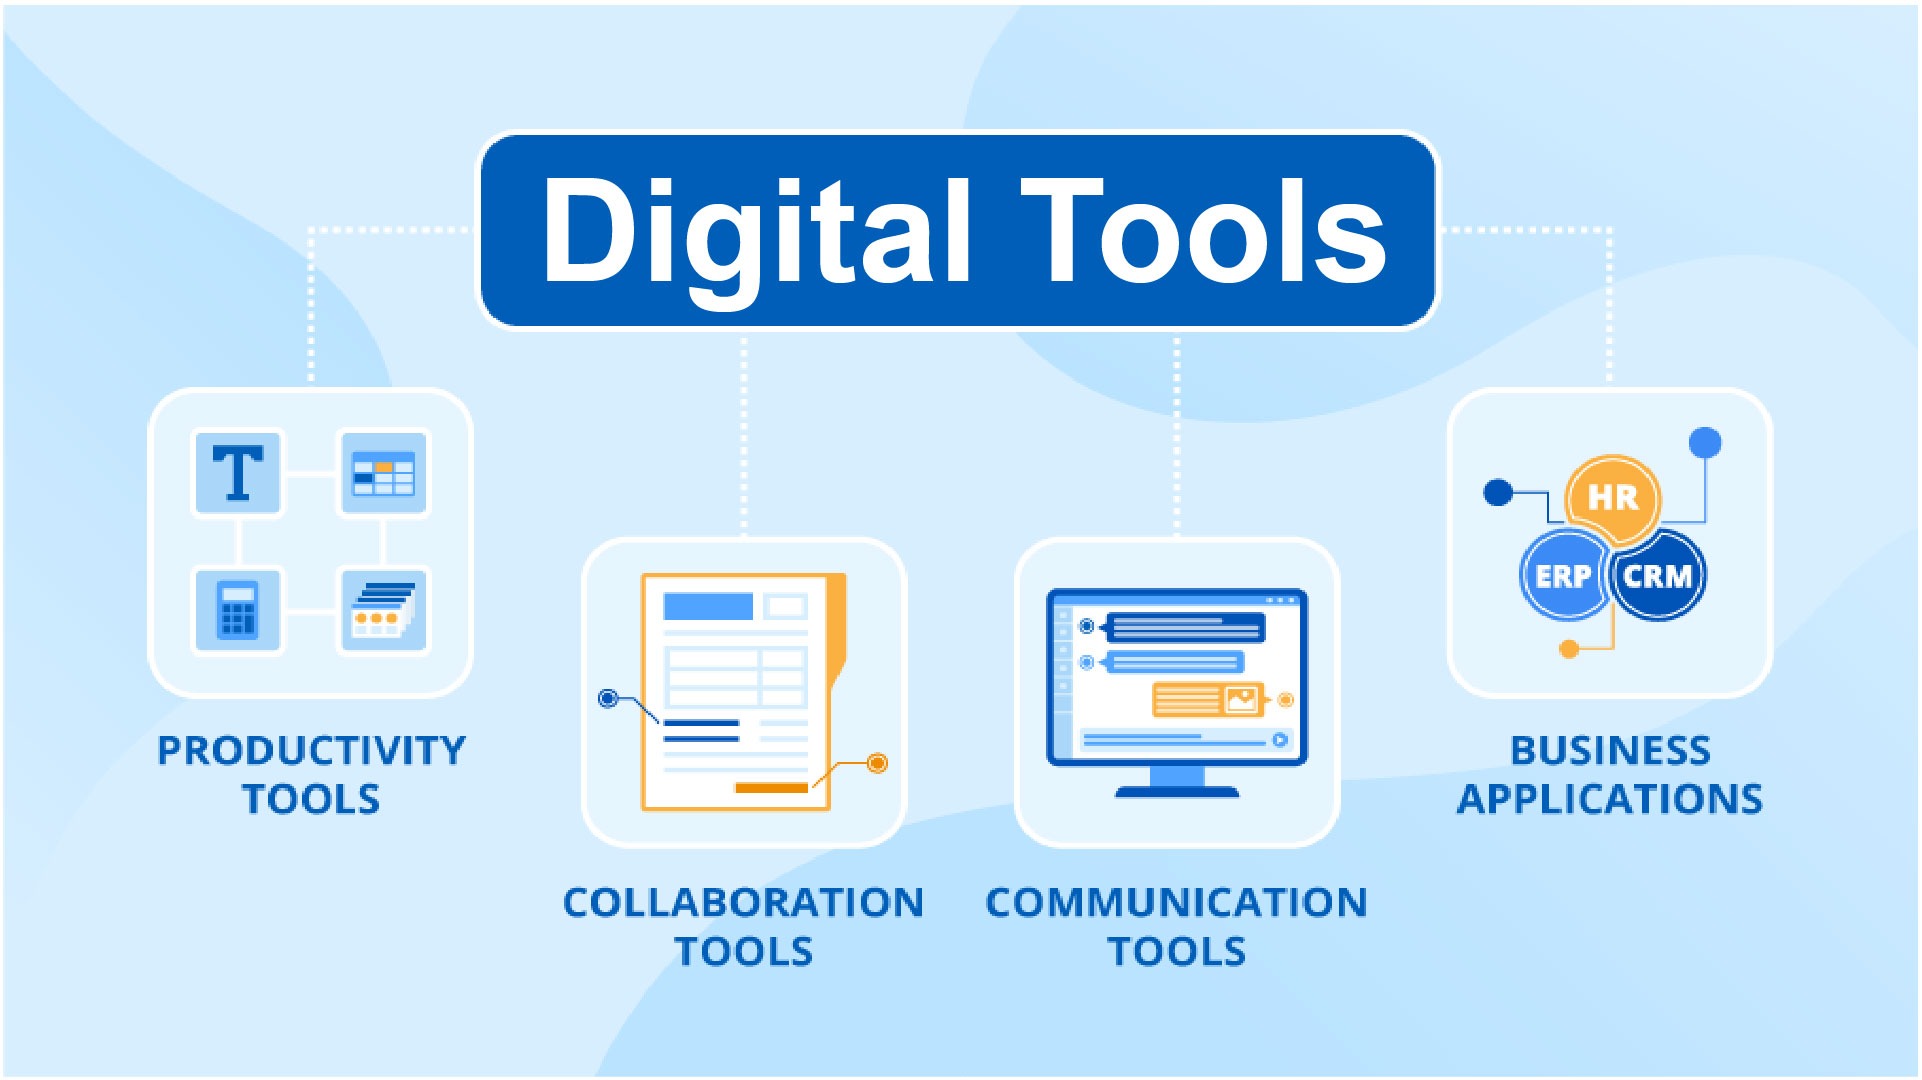 Digital Tools at Work: Benefits and Drawbacks